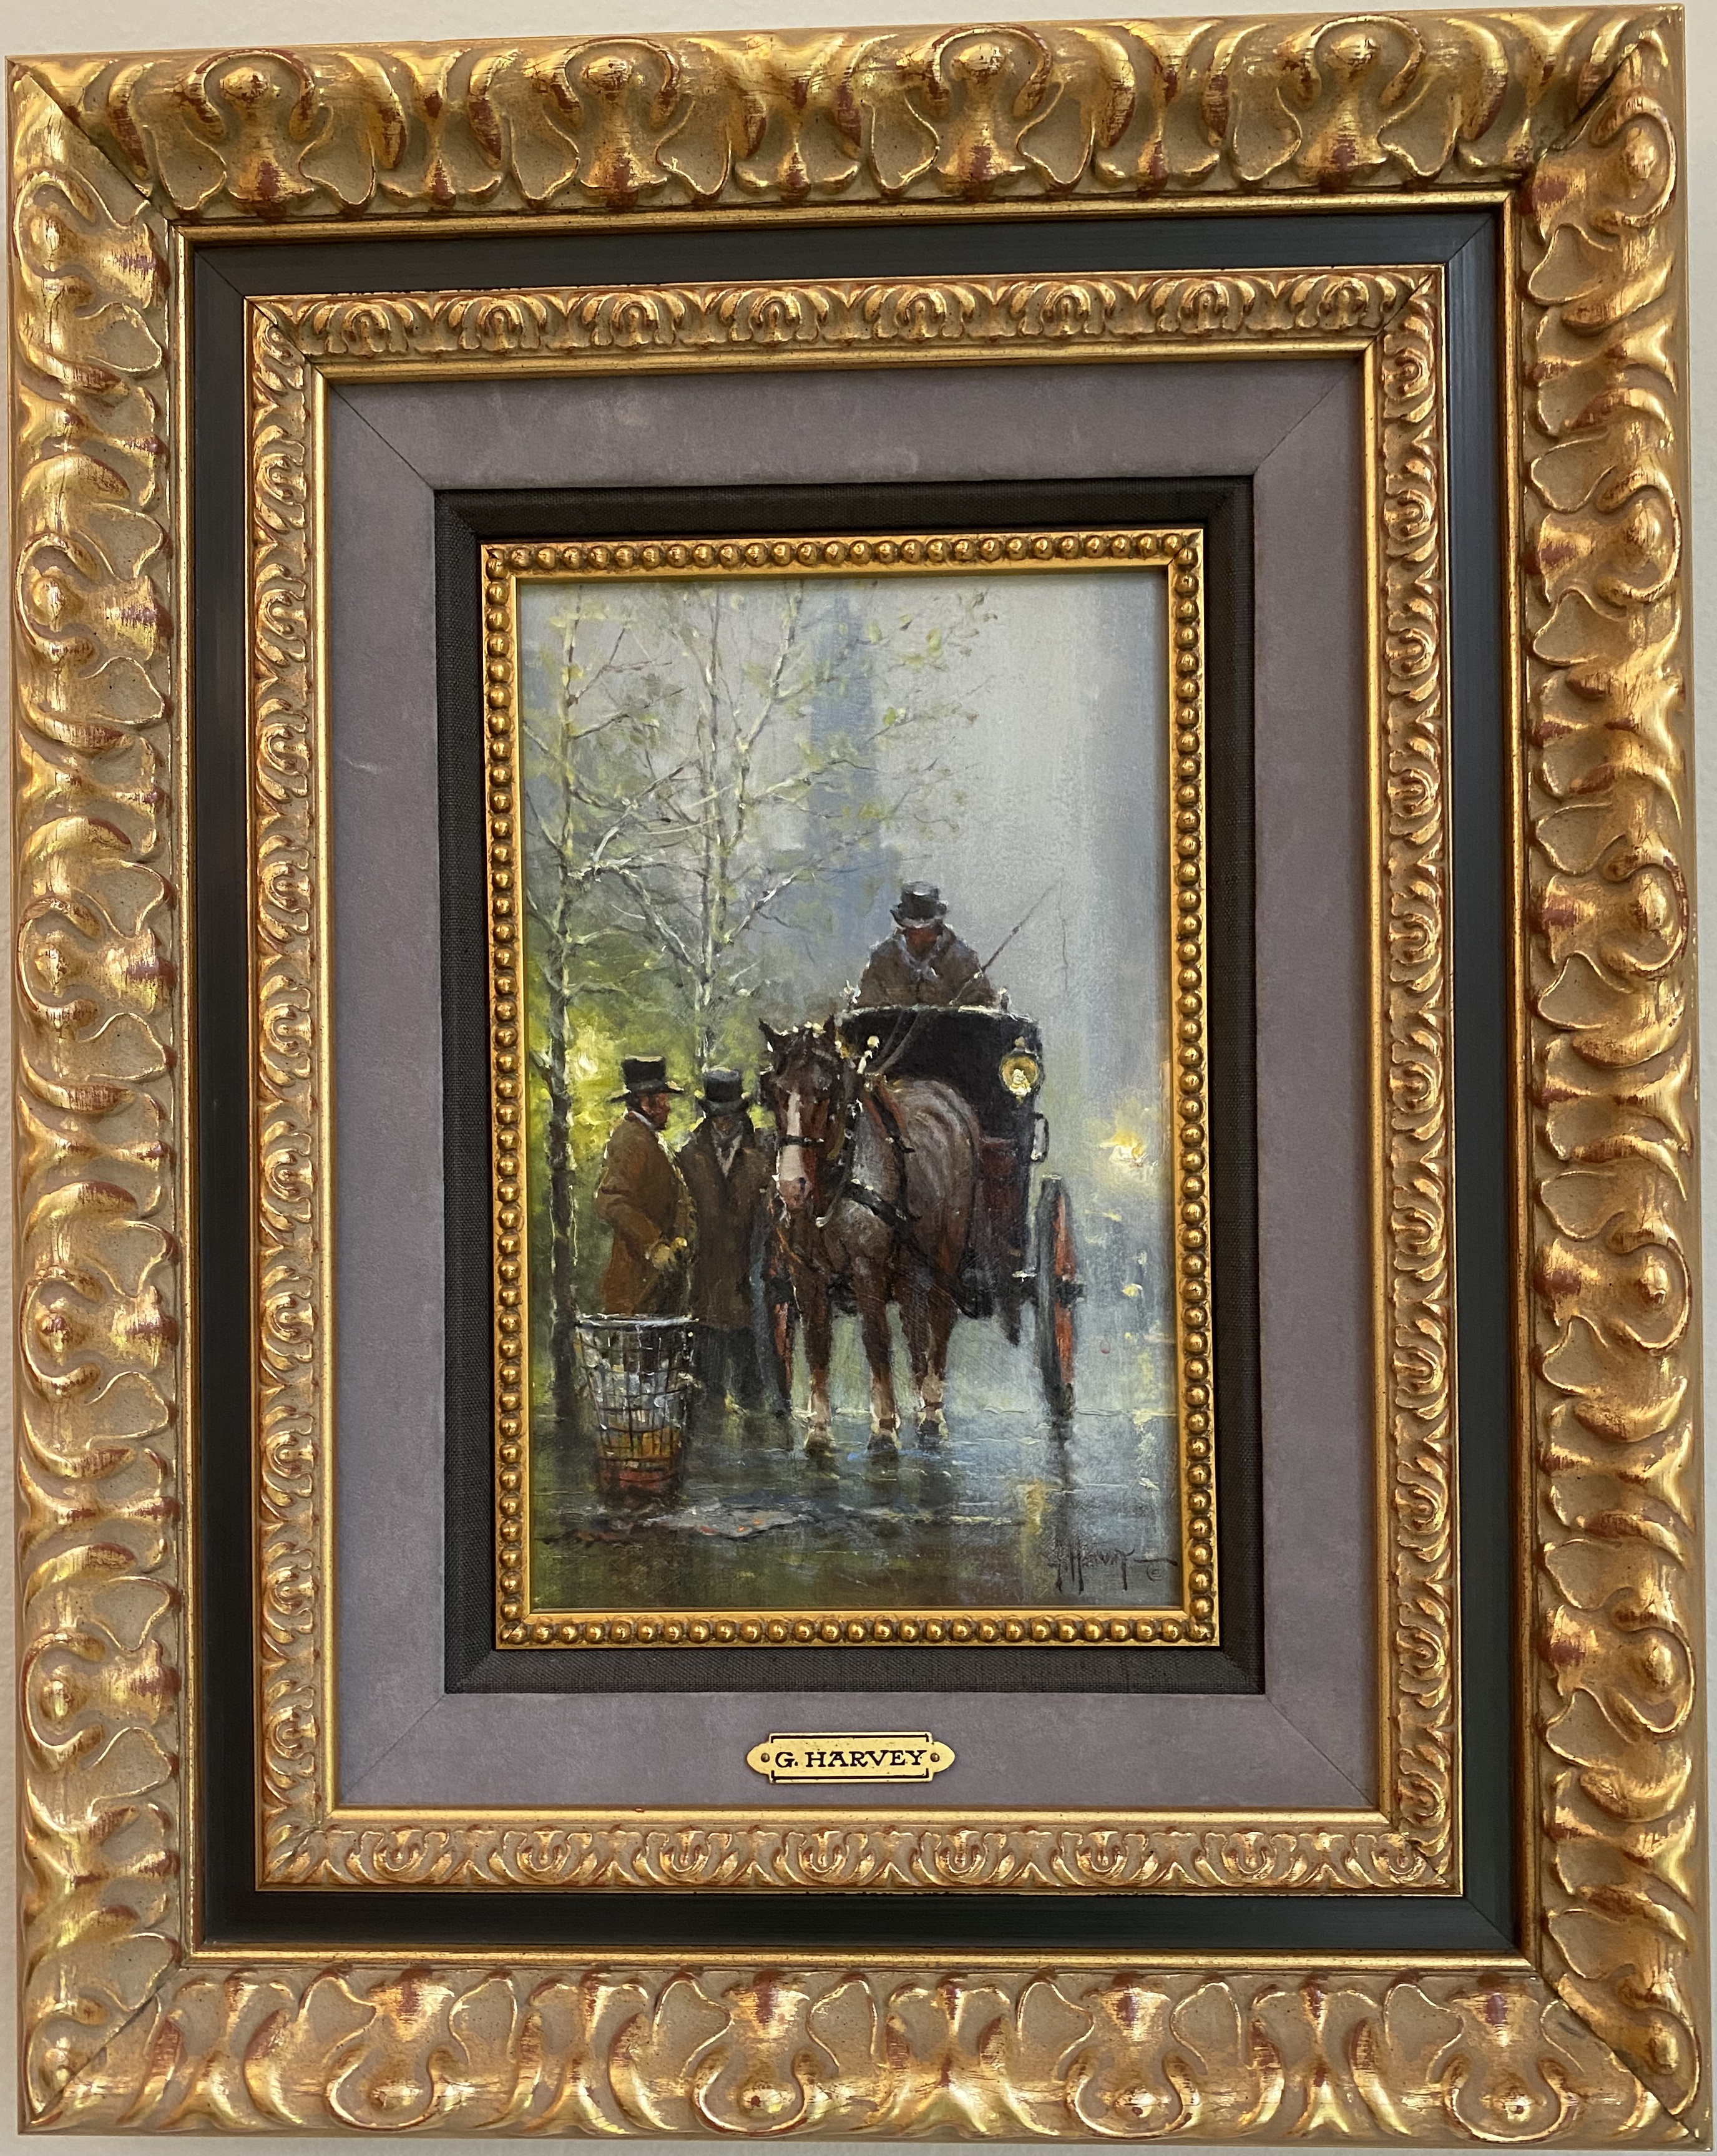 Original Painting, Gentleman's Carriage by G. Harvey